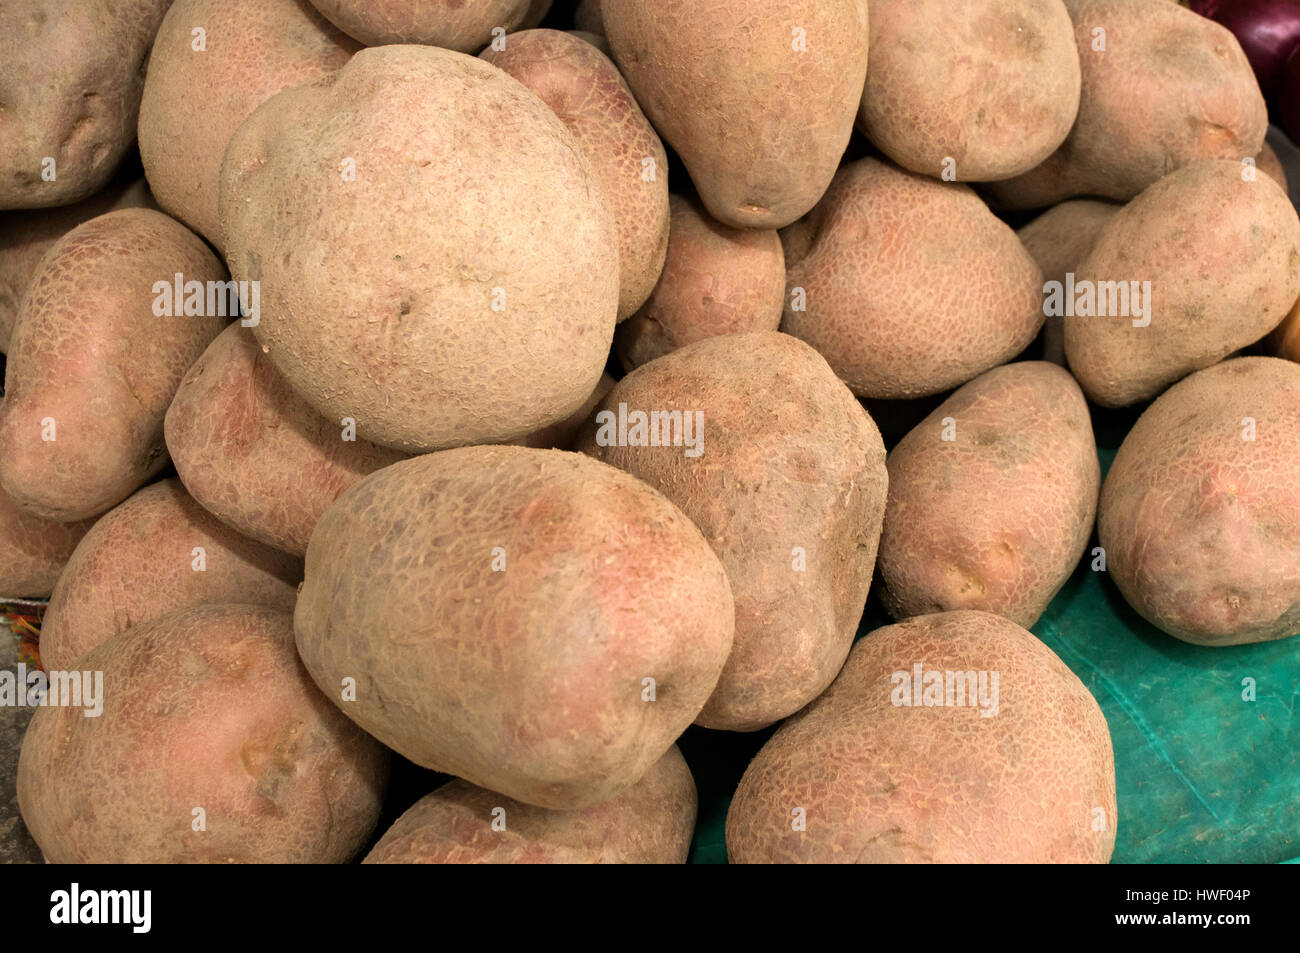 https://c8.alamy.com/comp/HWF04P/a-bunch-of-brown-potatoes-on-the-market-novi-sad-serbia-HWF04P.jpg